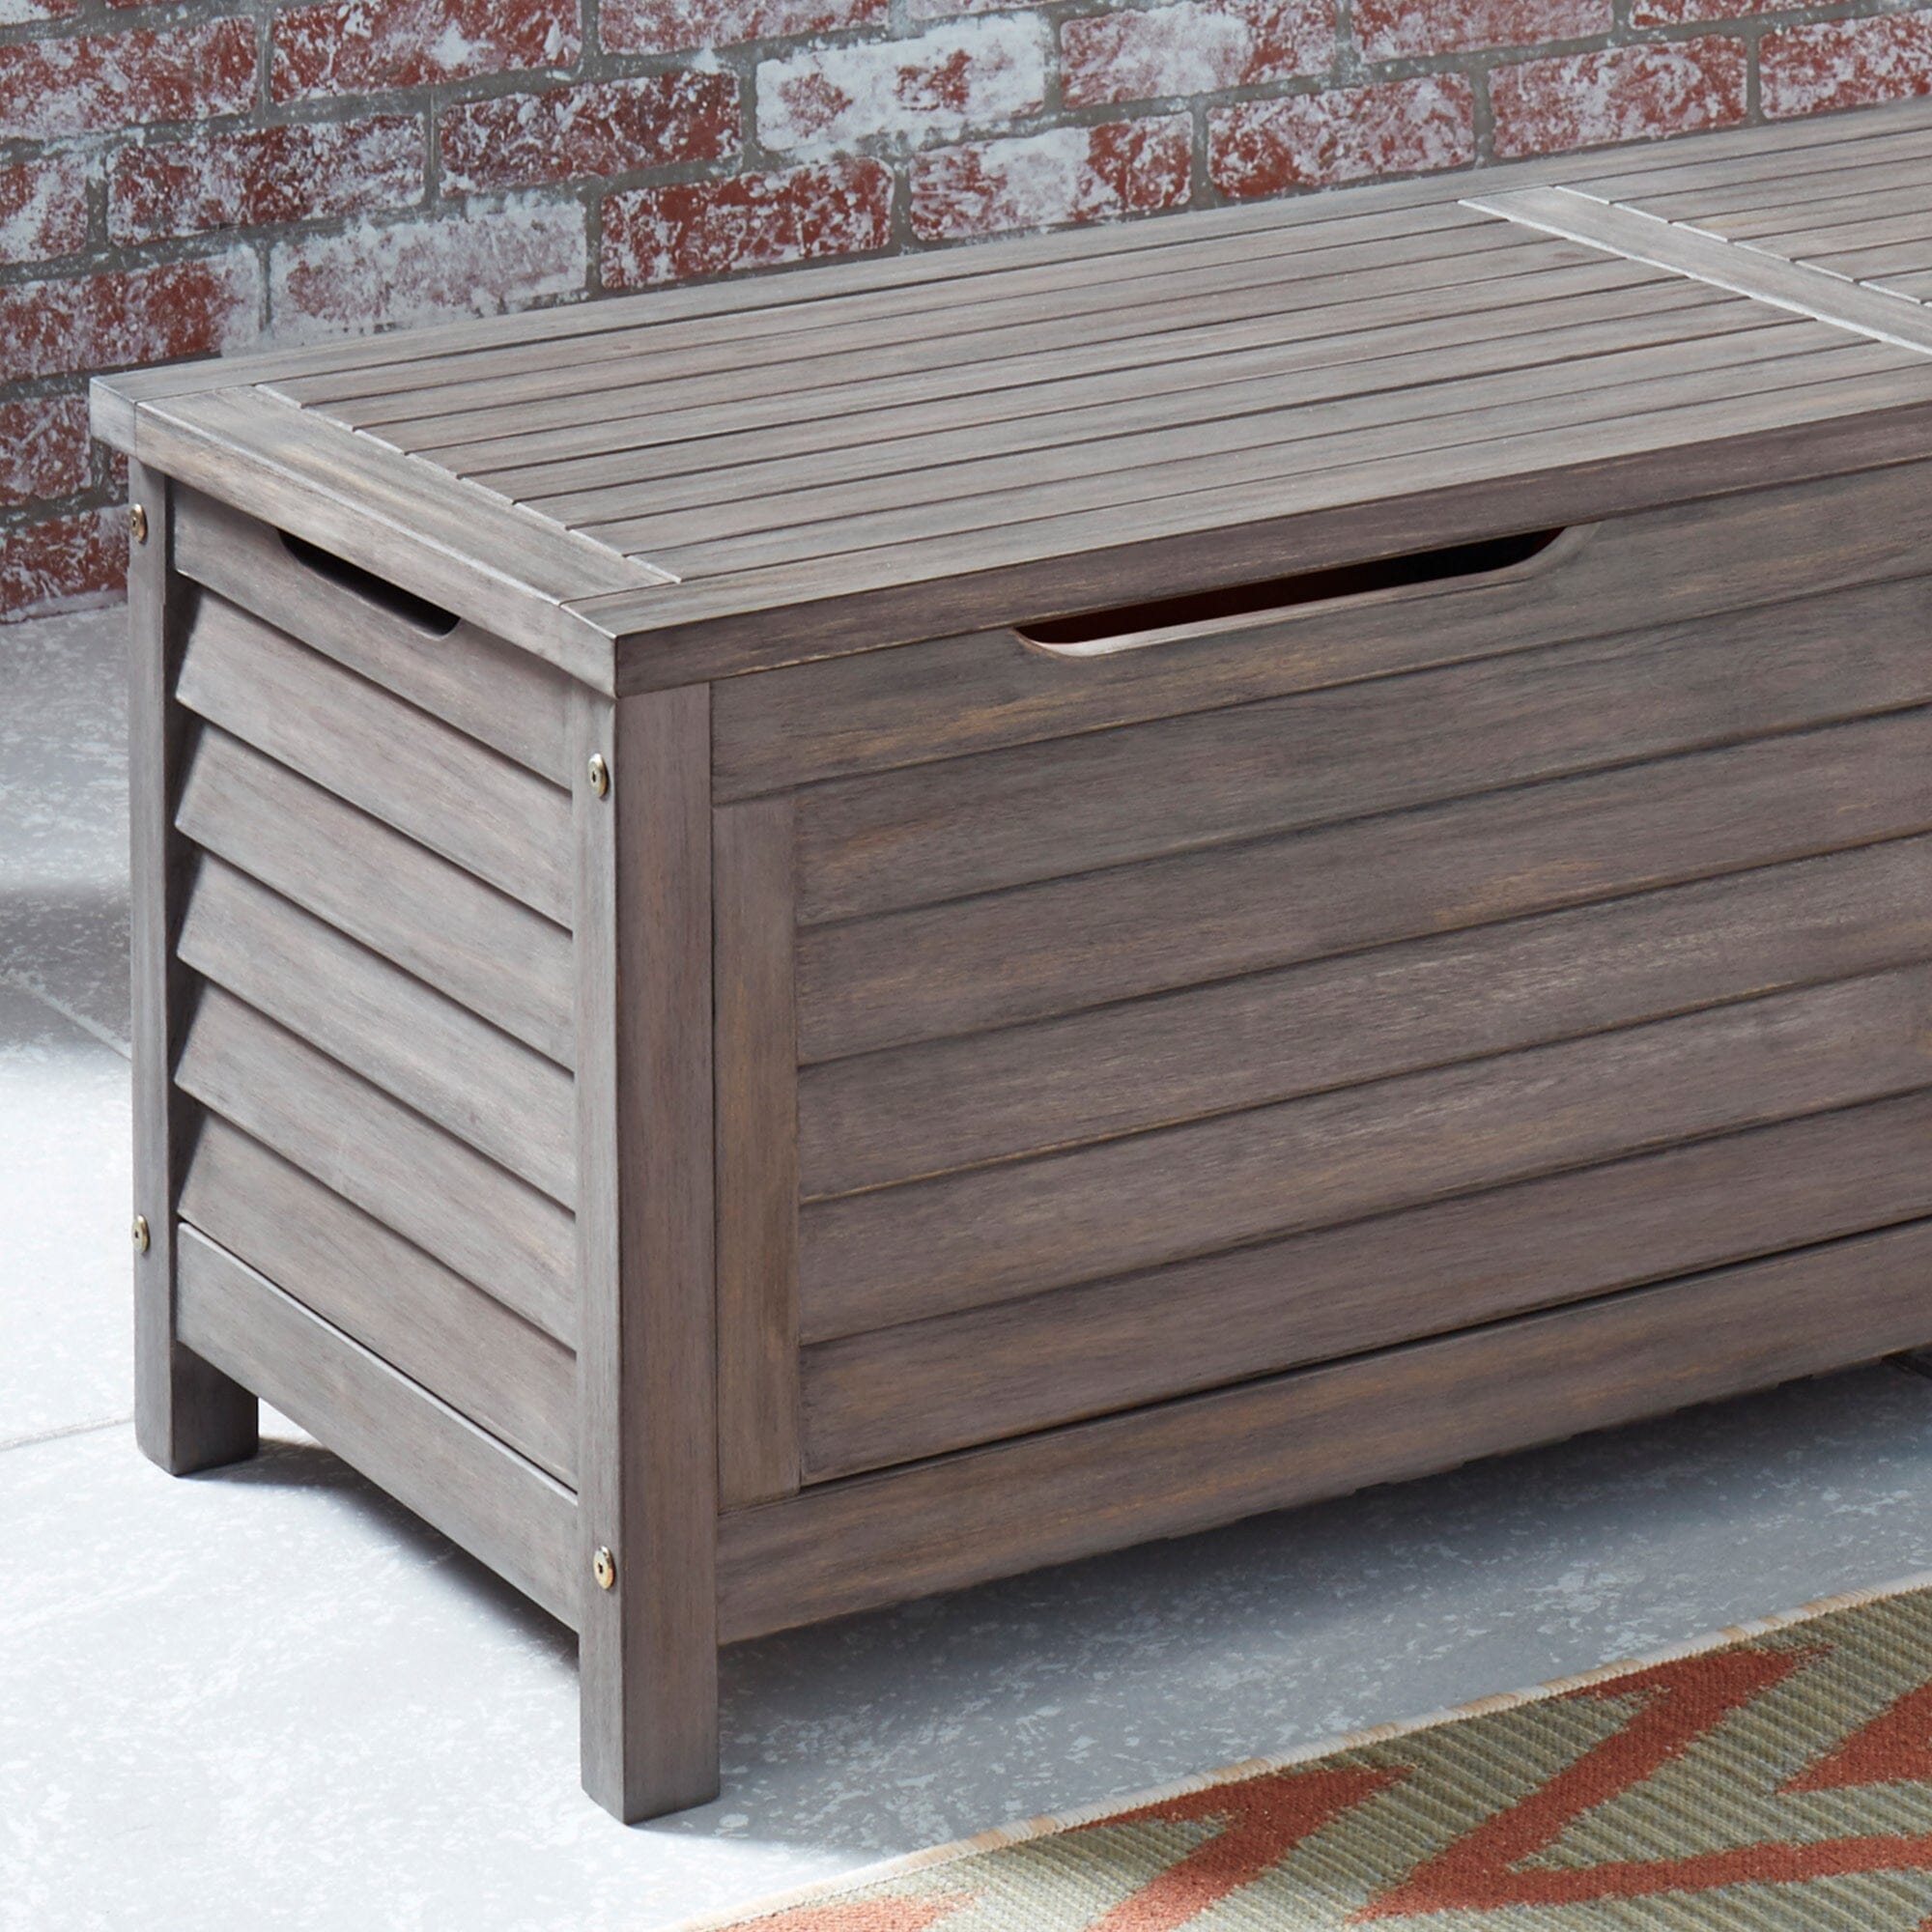 Traditional Deck Box By Maho Deck Box Maho